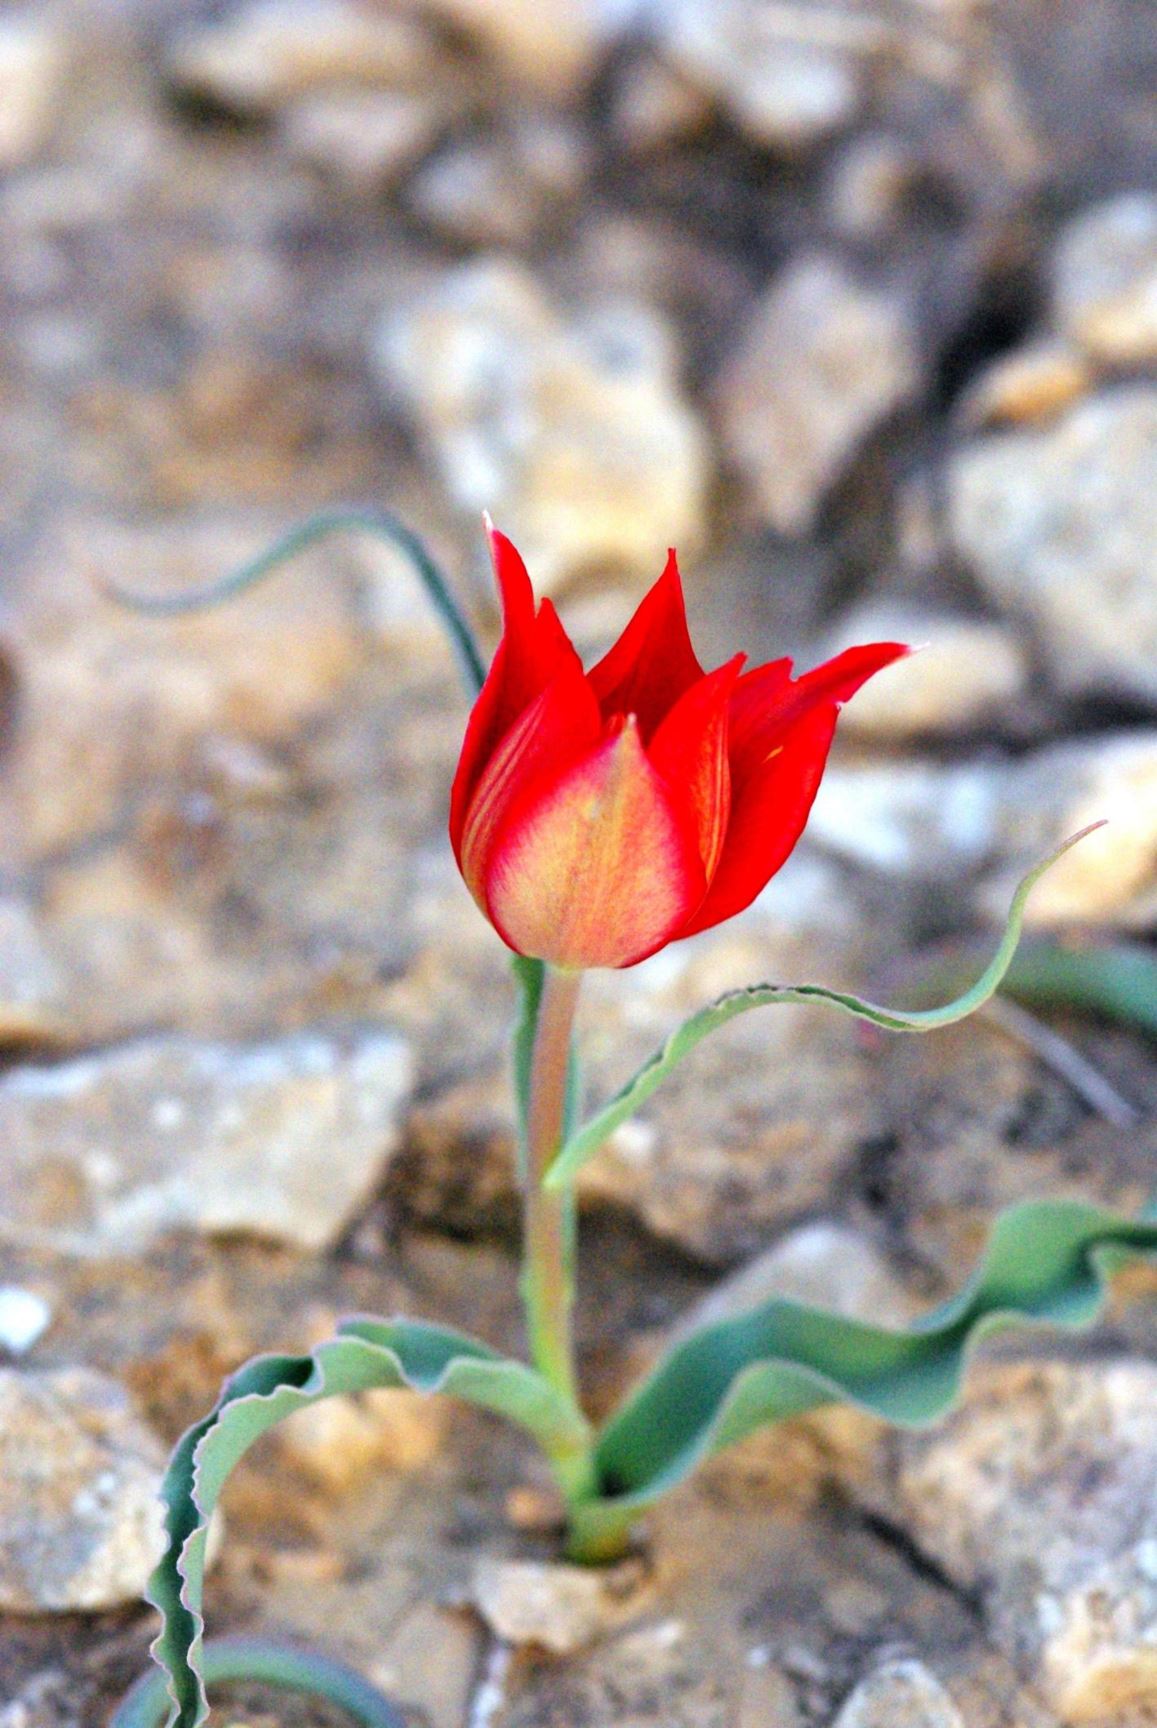 Tulipa agenensis - Agen Tulip,  Eyed Tulip, Sun's-eye Tulip, צבעוני ההרים, צבעוני ההרים